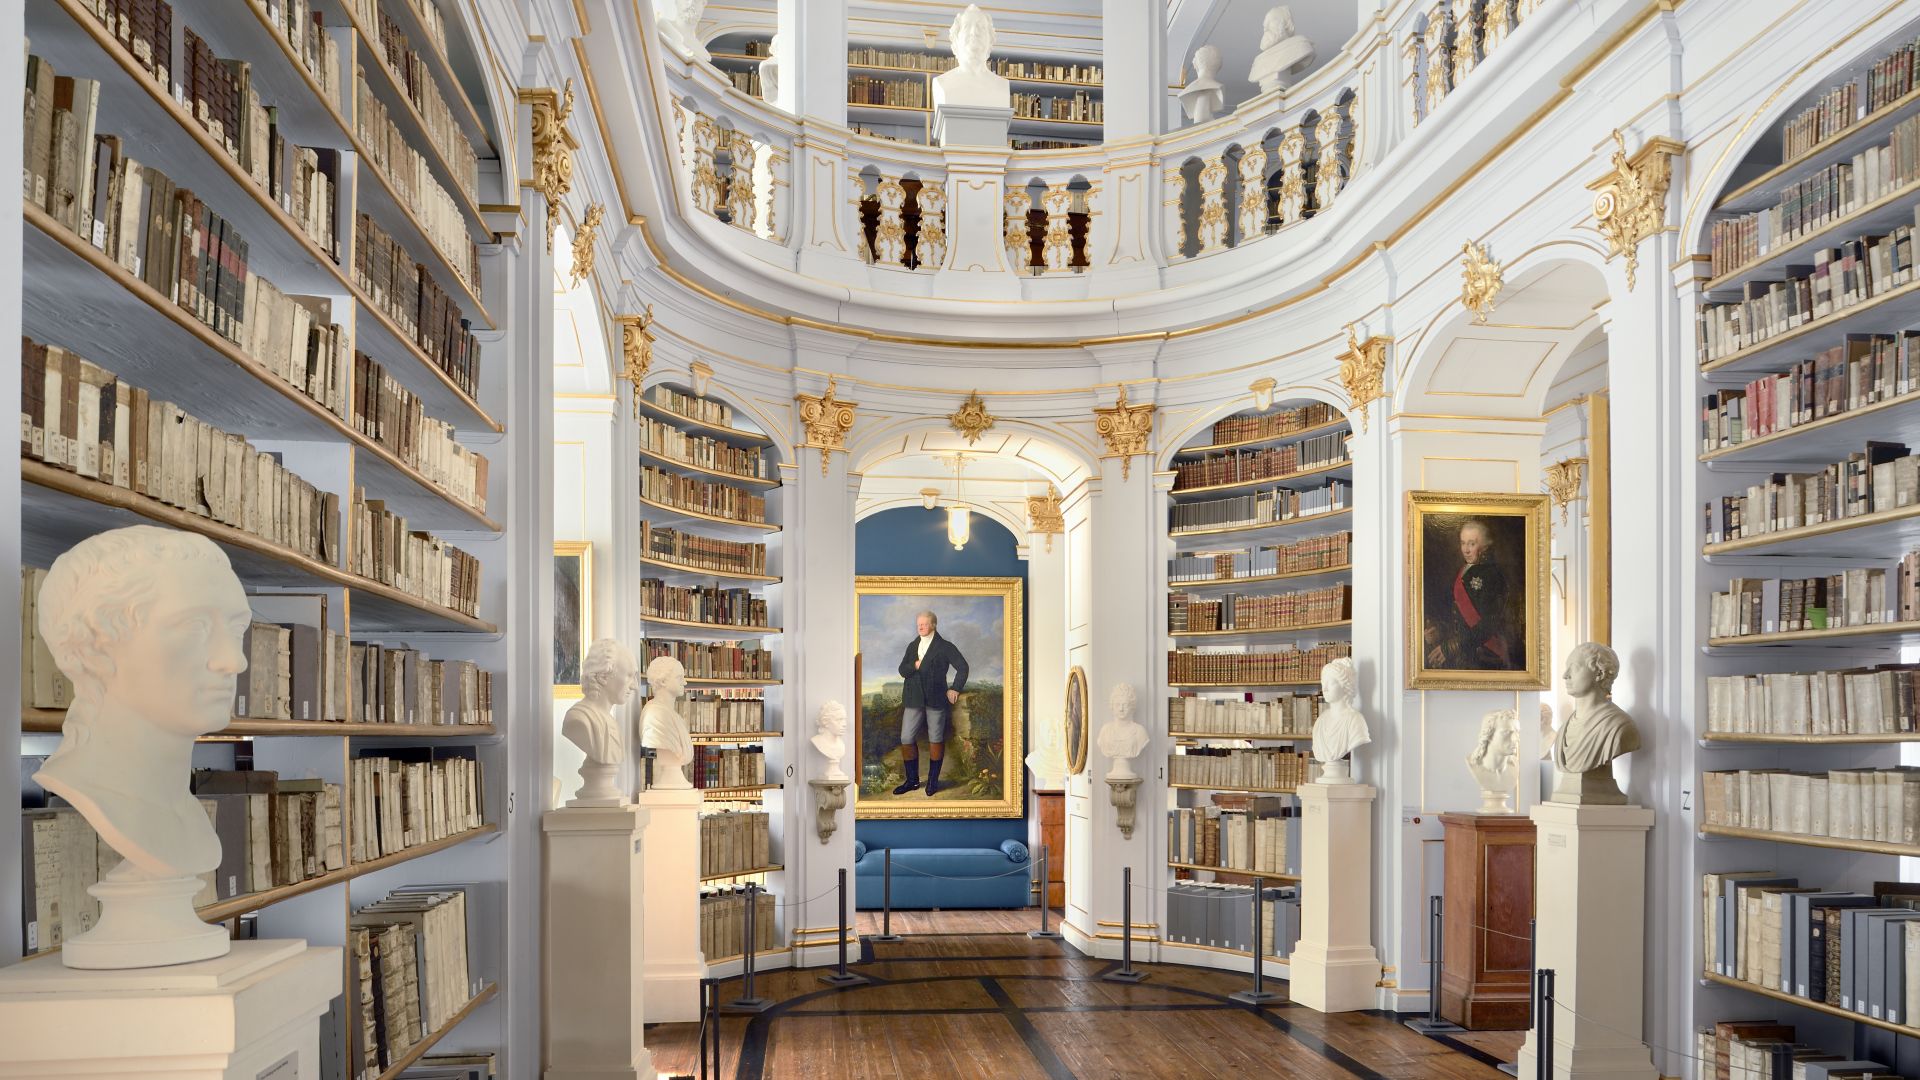 Weimar: Rococo Room in the Anna Amalia Library